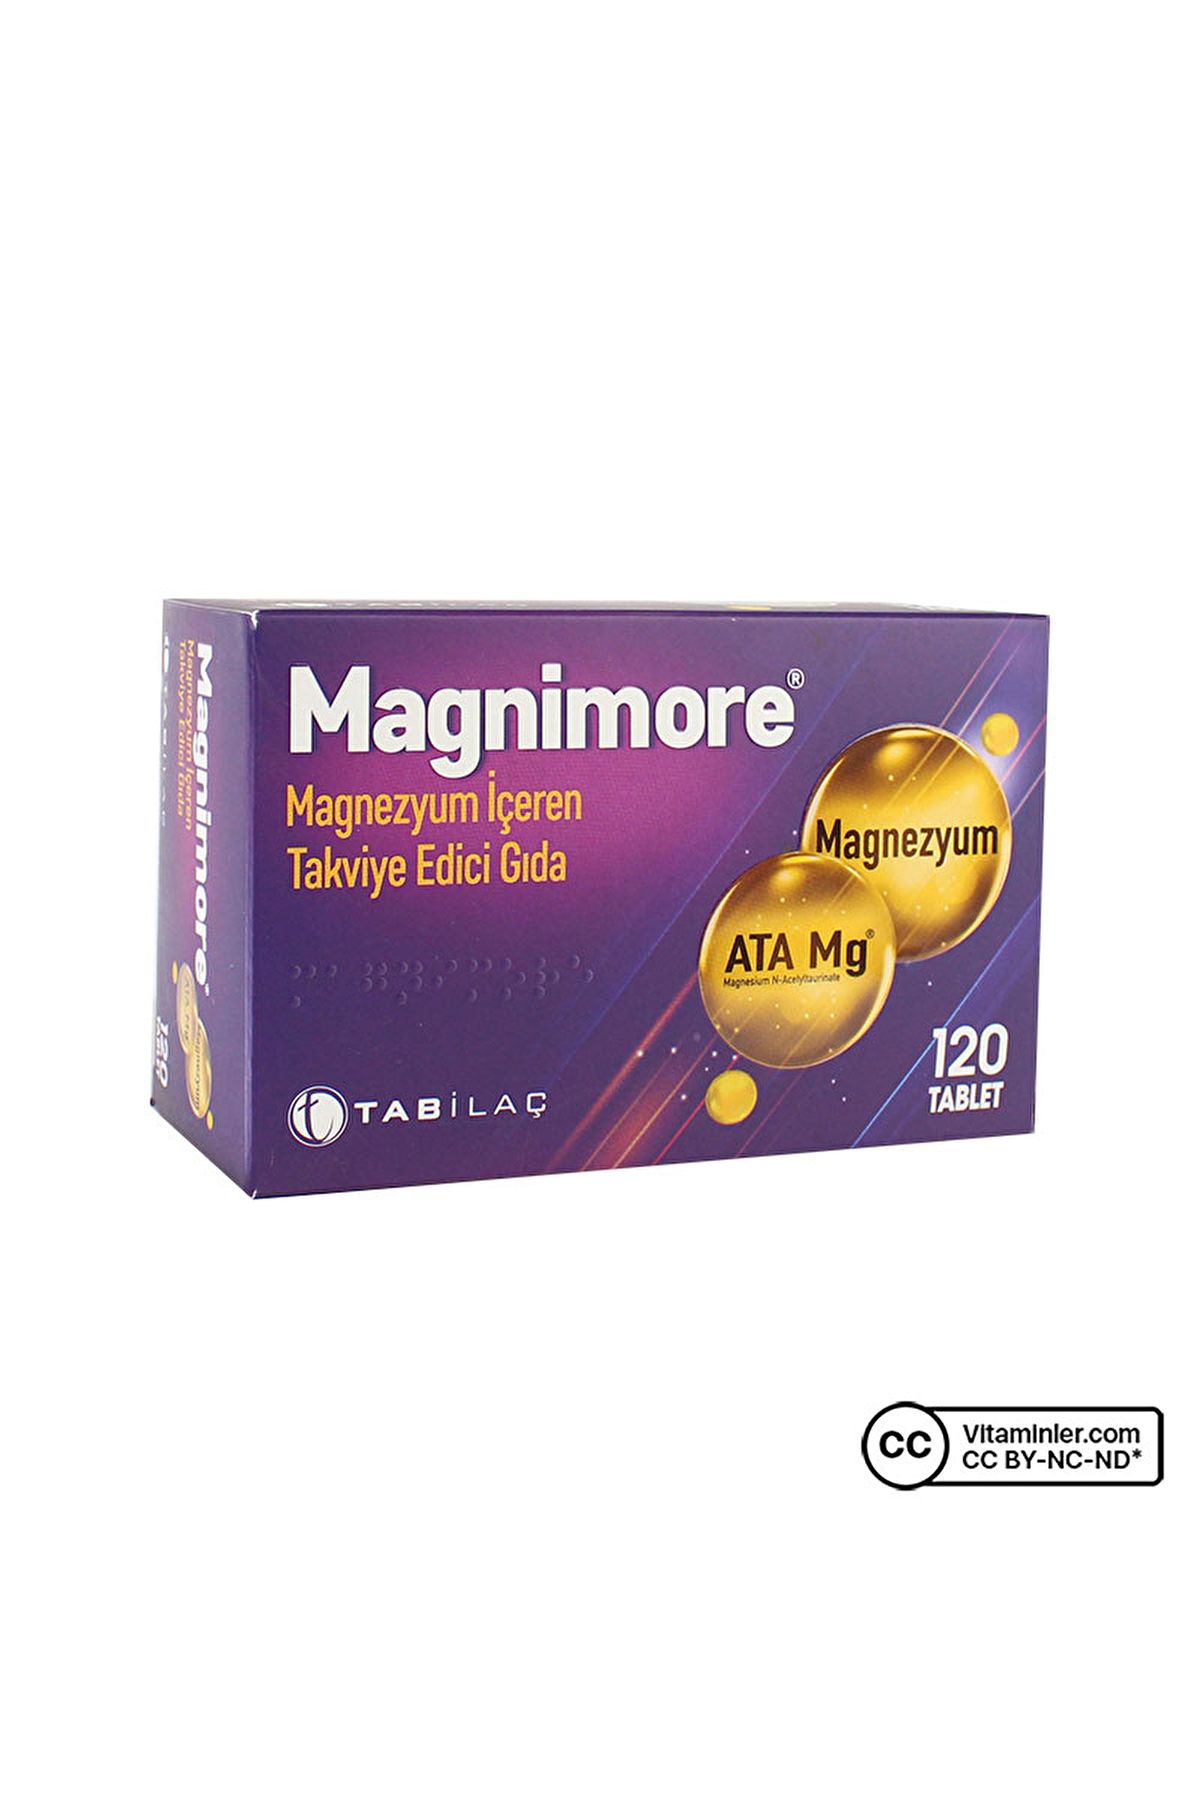 Magnimore Tab Ilaç Ata Form 120 Tablet